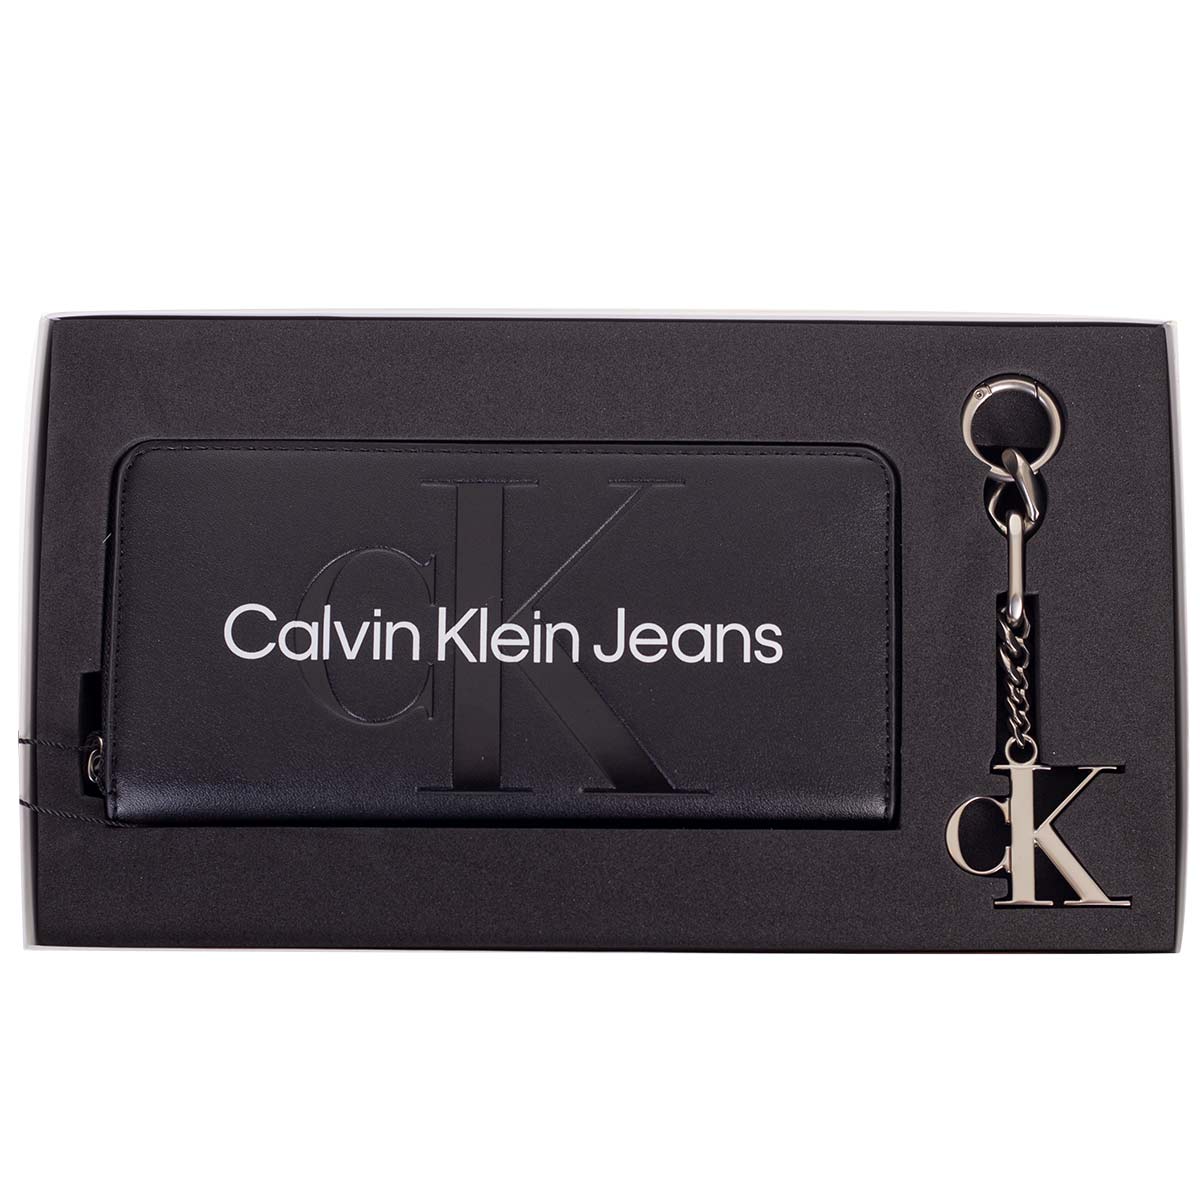 Calvin Klein Jeans Woman's Wallet 8720108583121